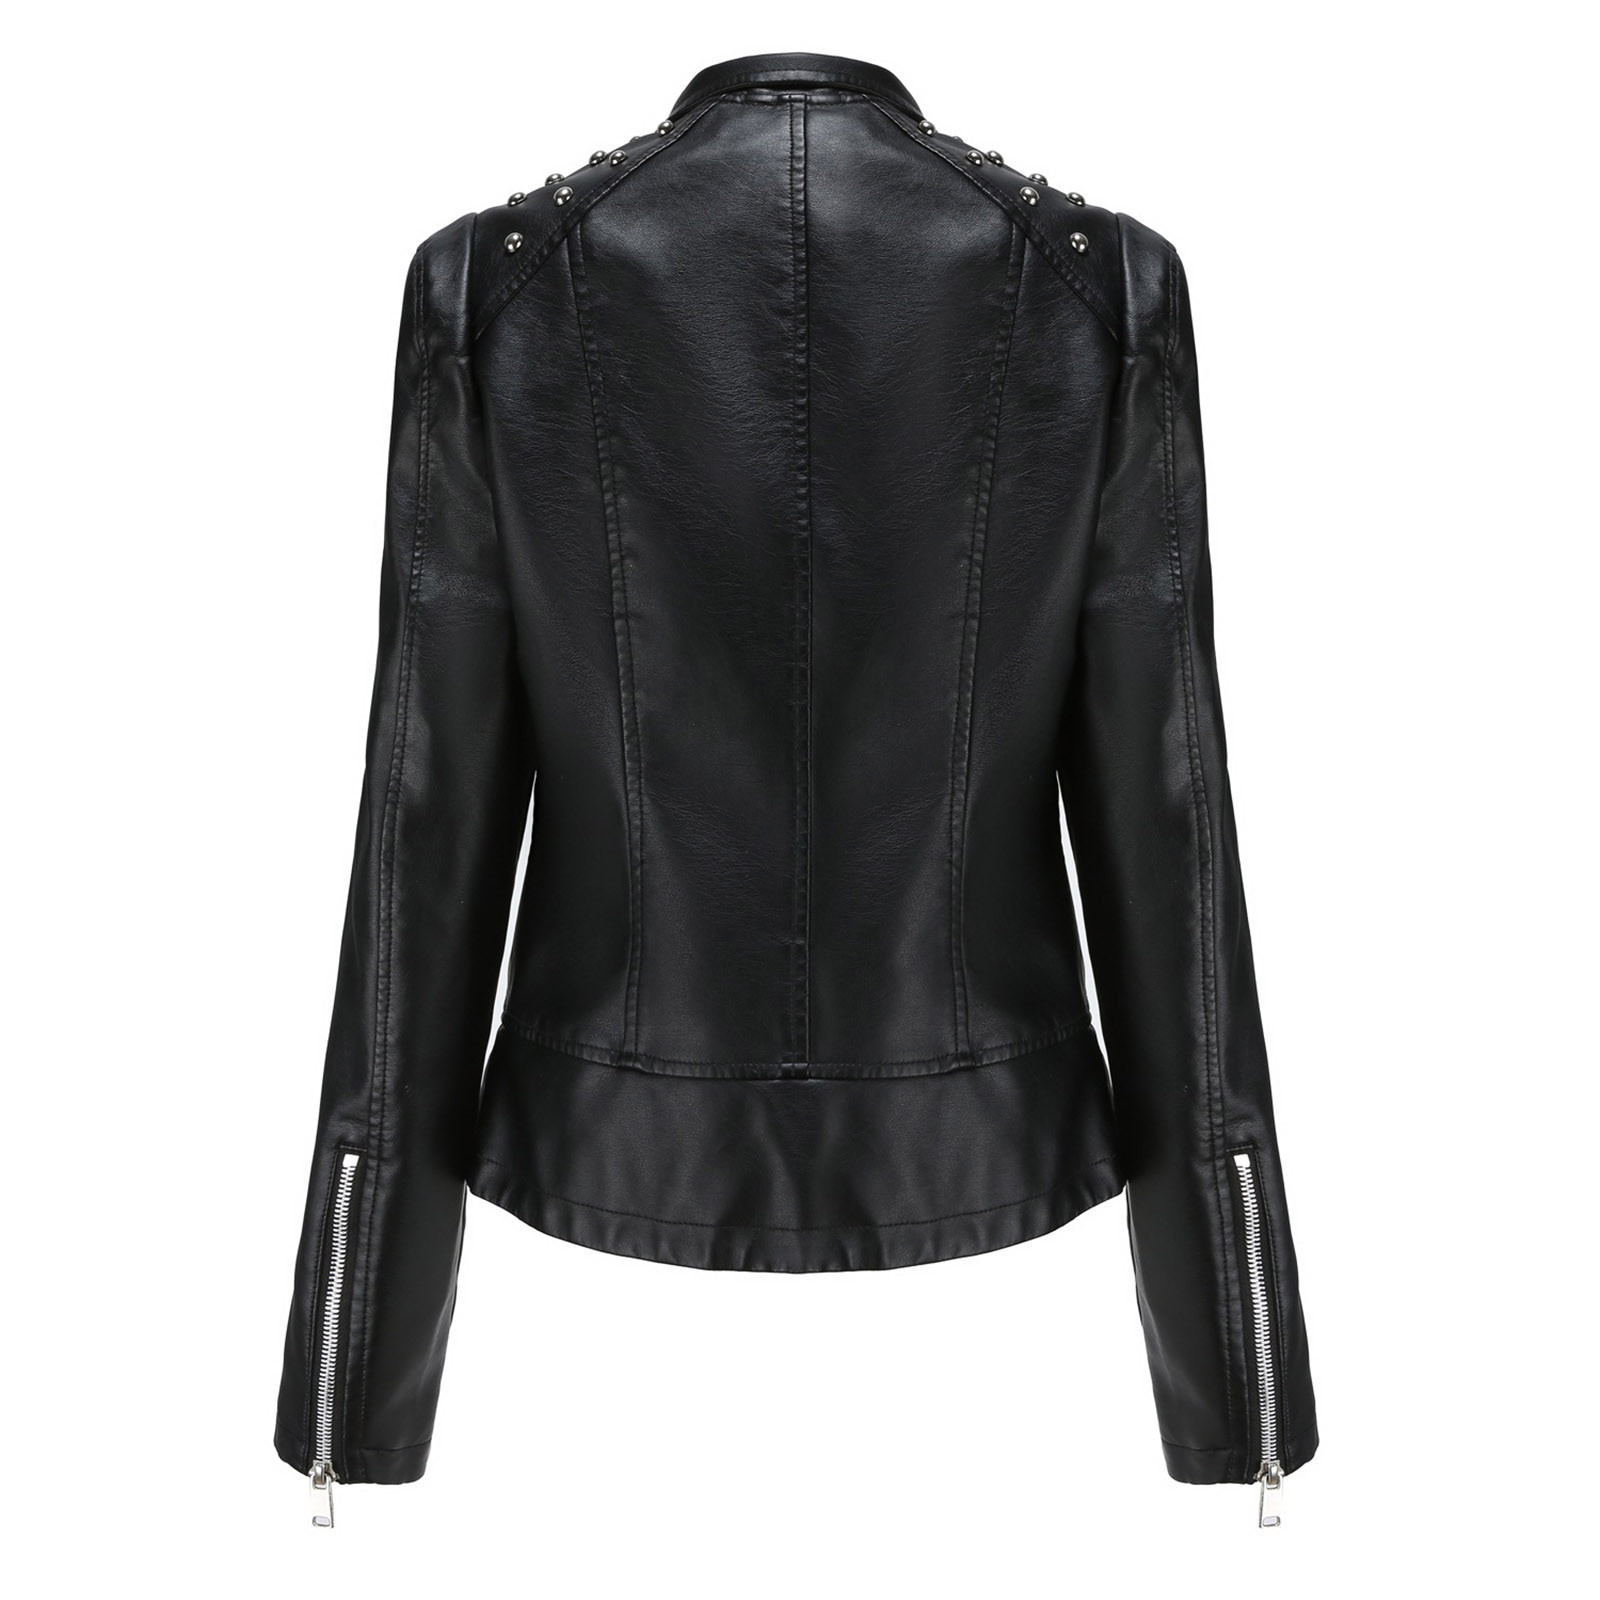 Leather Jacket for Women Fashion Faux Leather Zipper Motorcycle Jacket Plus Size Leather Tops Moto Biker Short - image 4 of 7